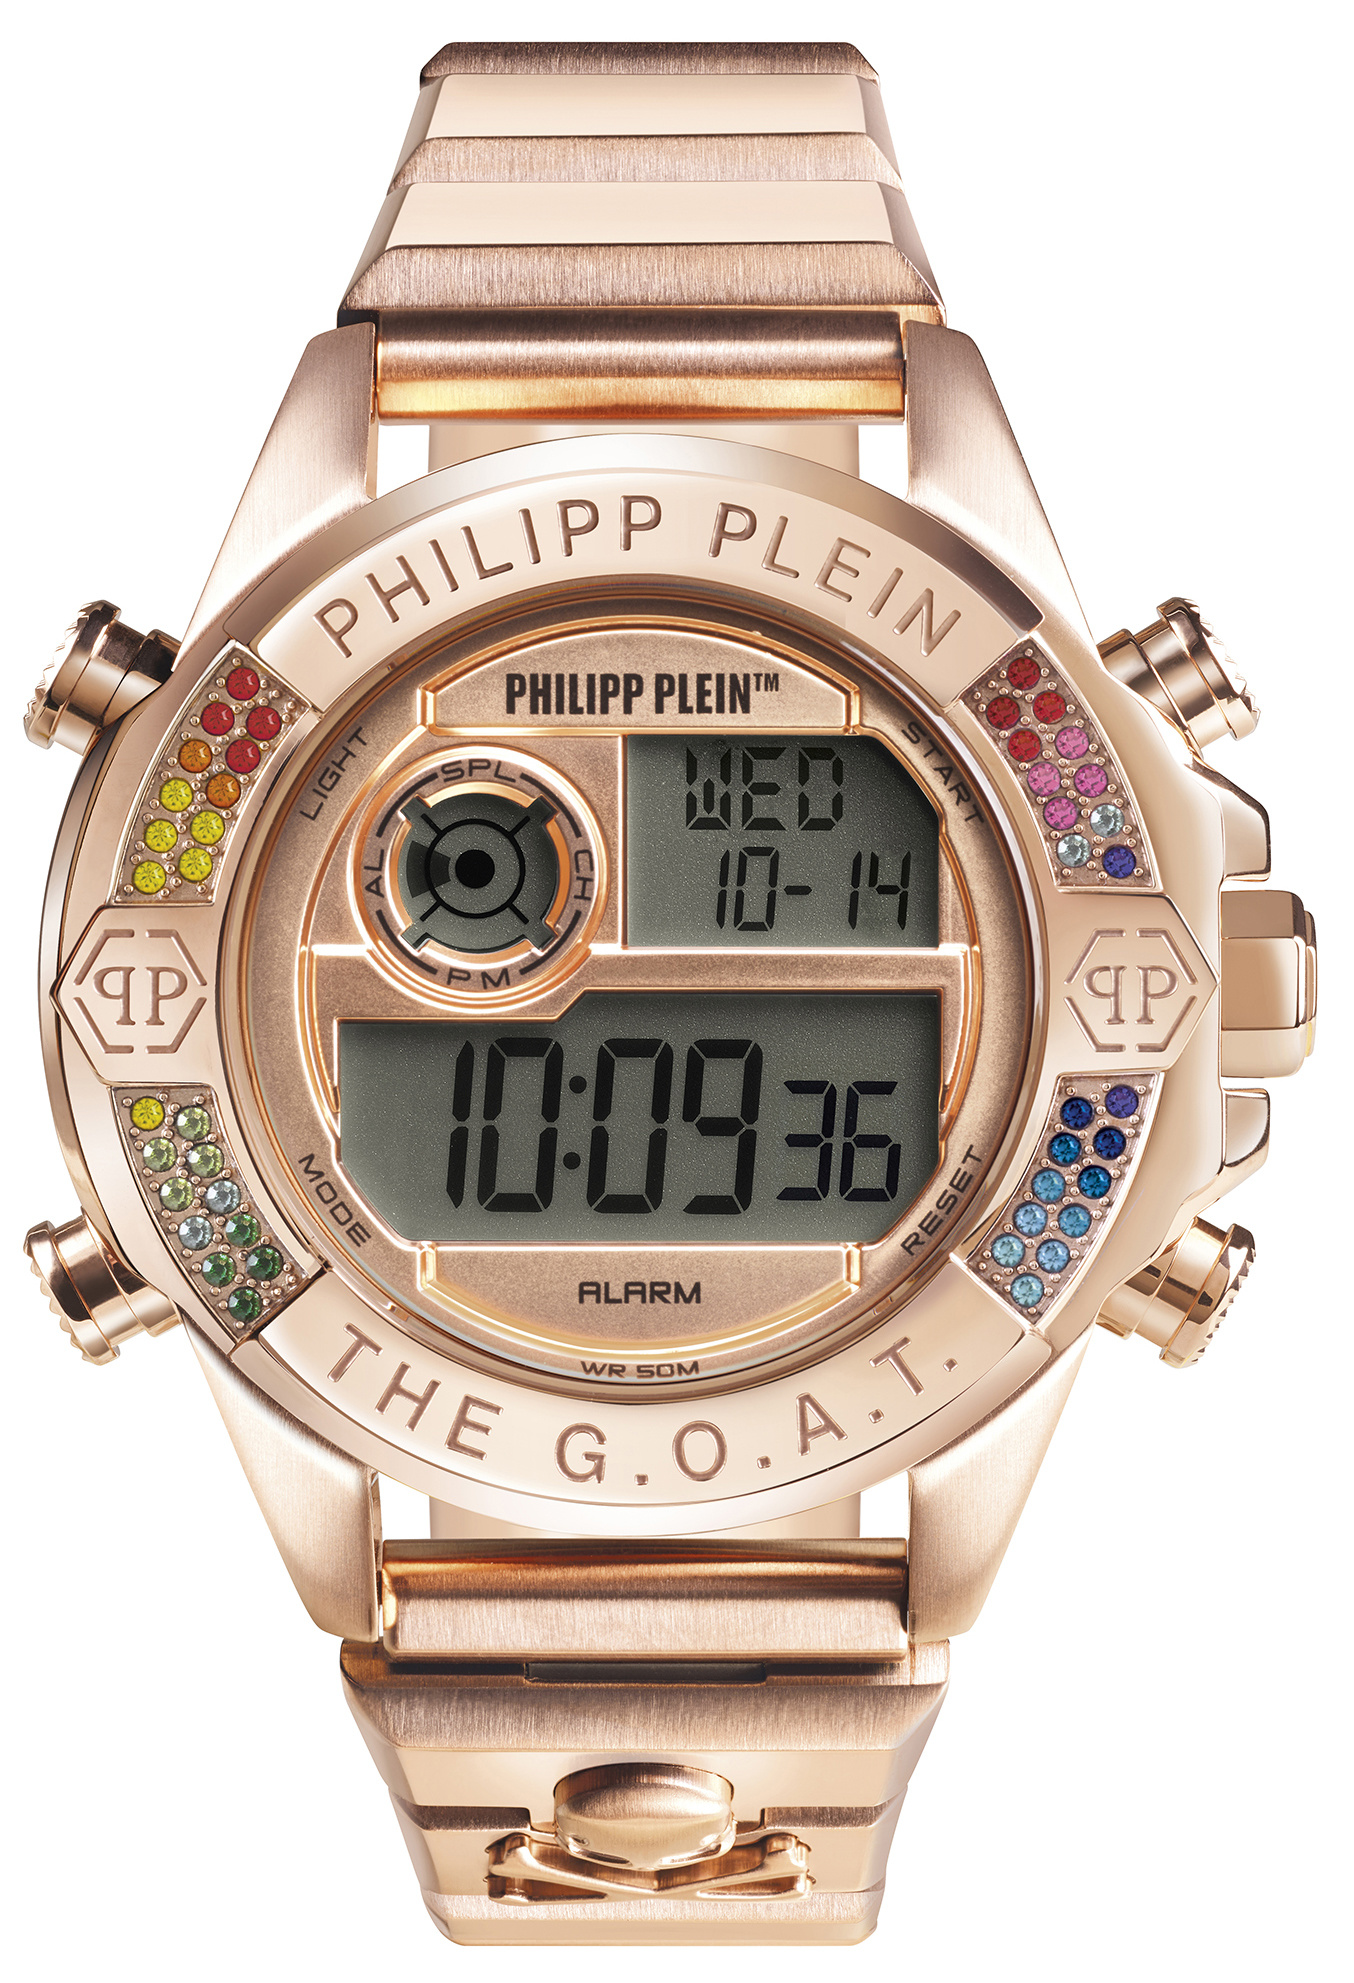 Philipp Plein The GOAT